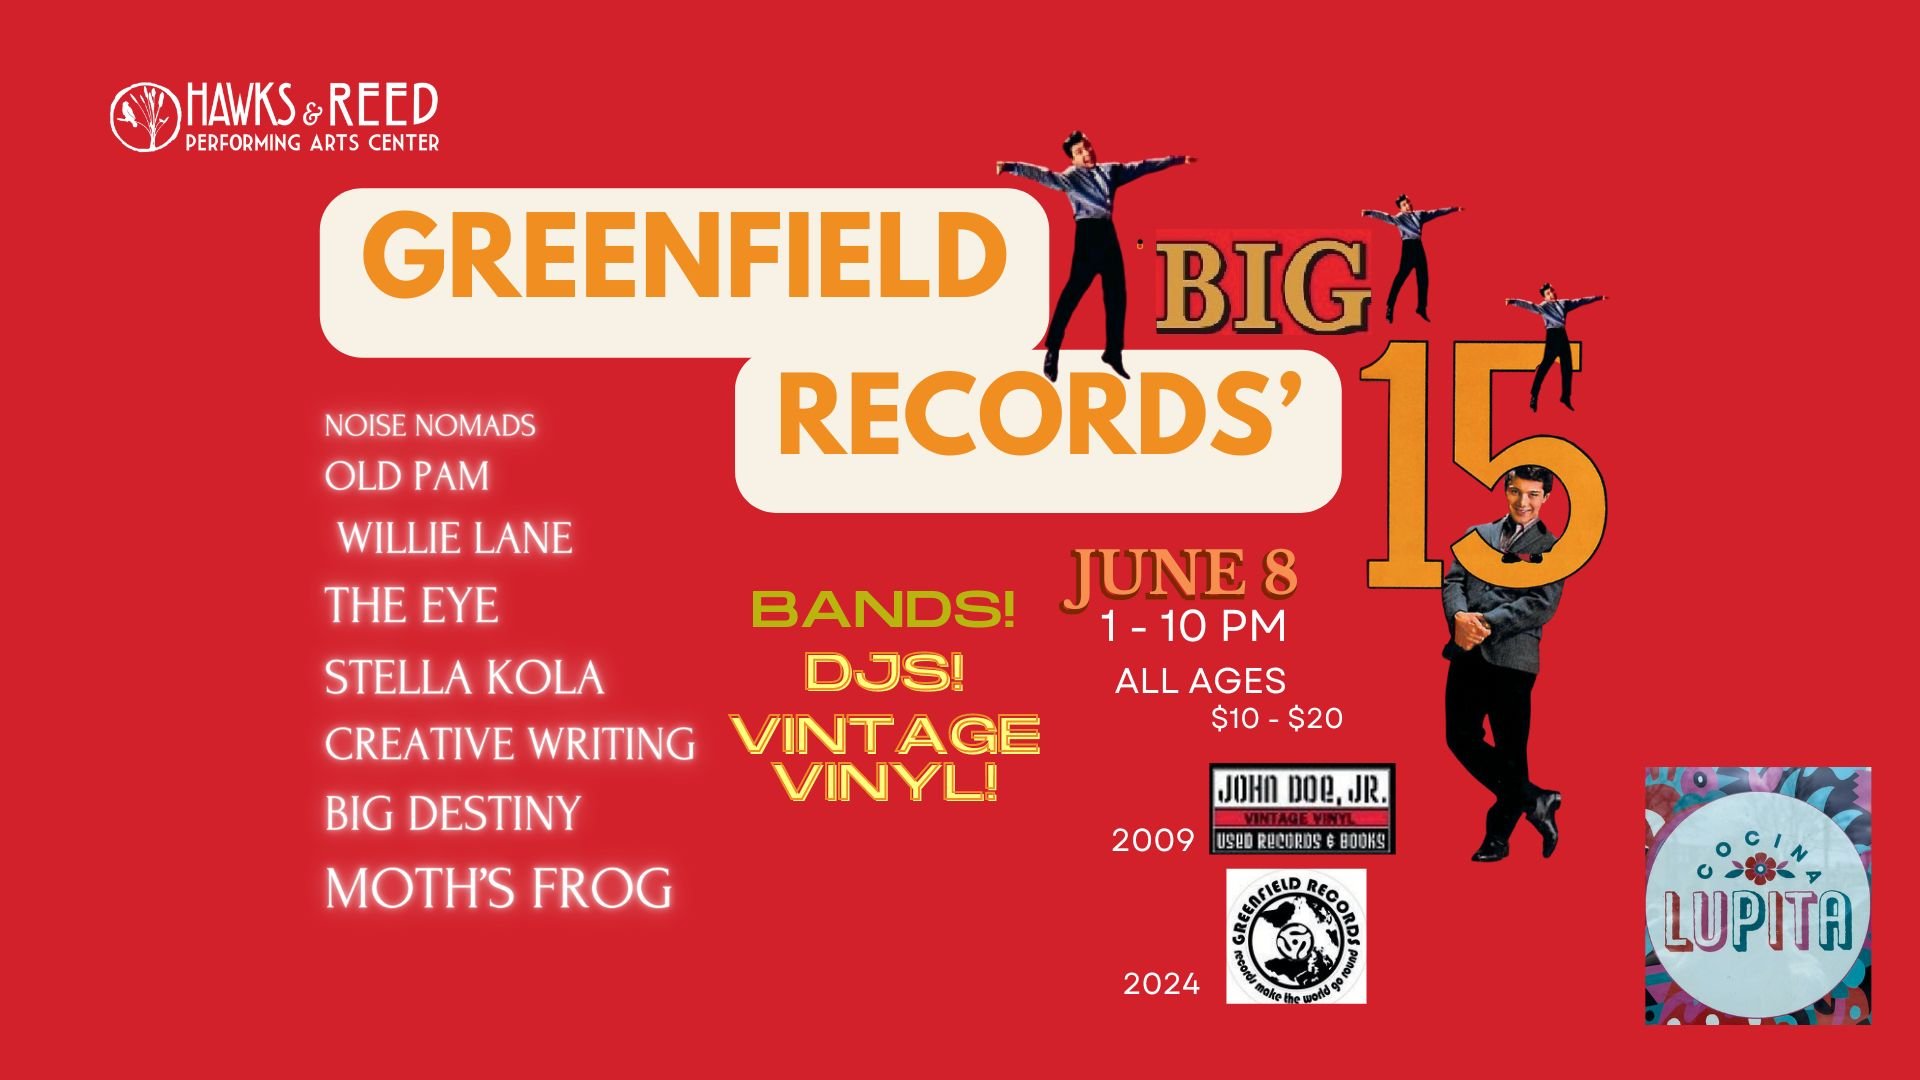 Greenfield Records Big 15th!